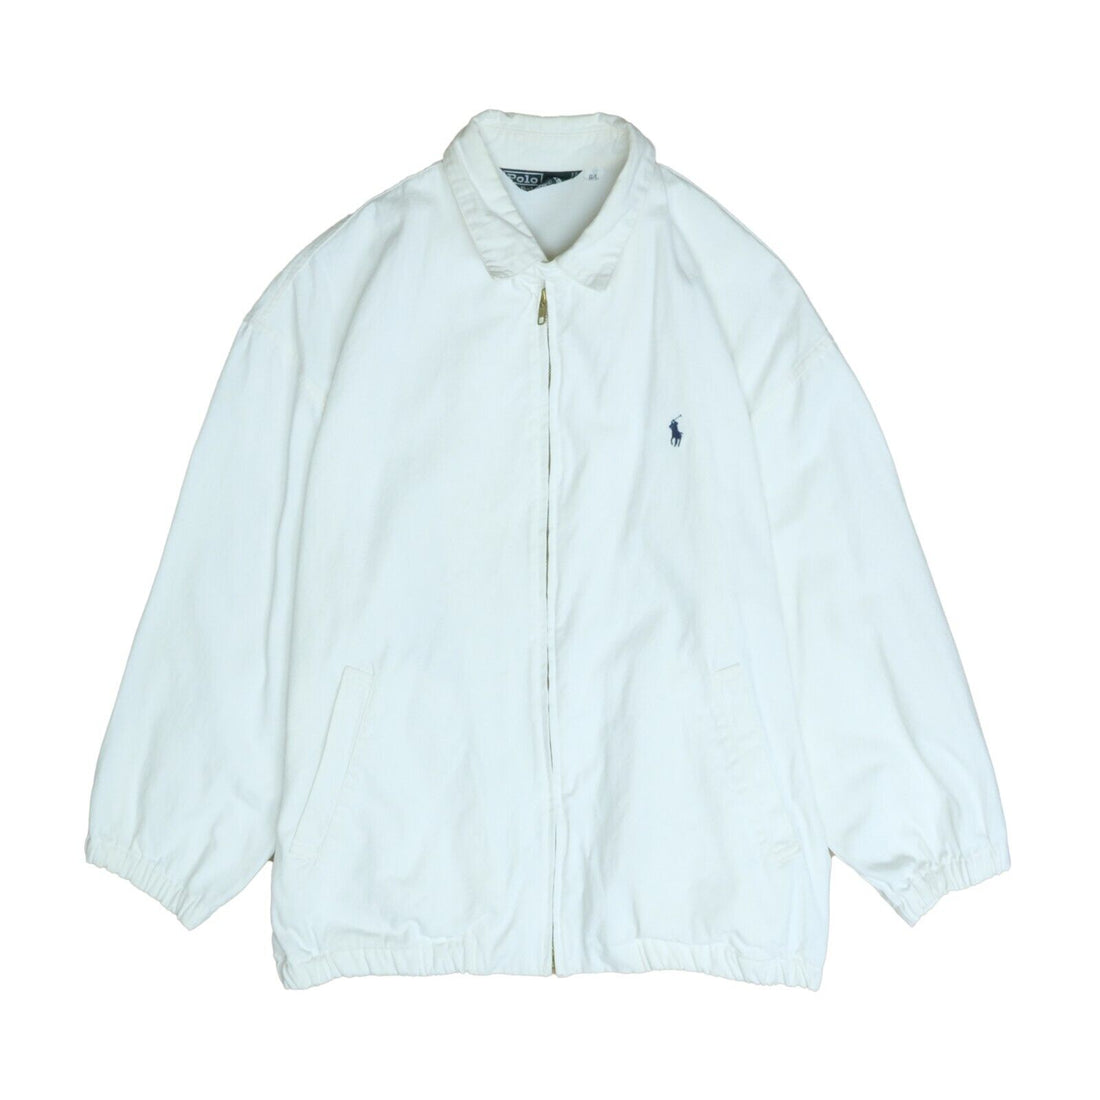 Vintage Polo Ralph Lauren Harrington Jacket Size Large White